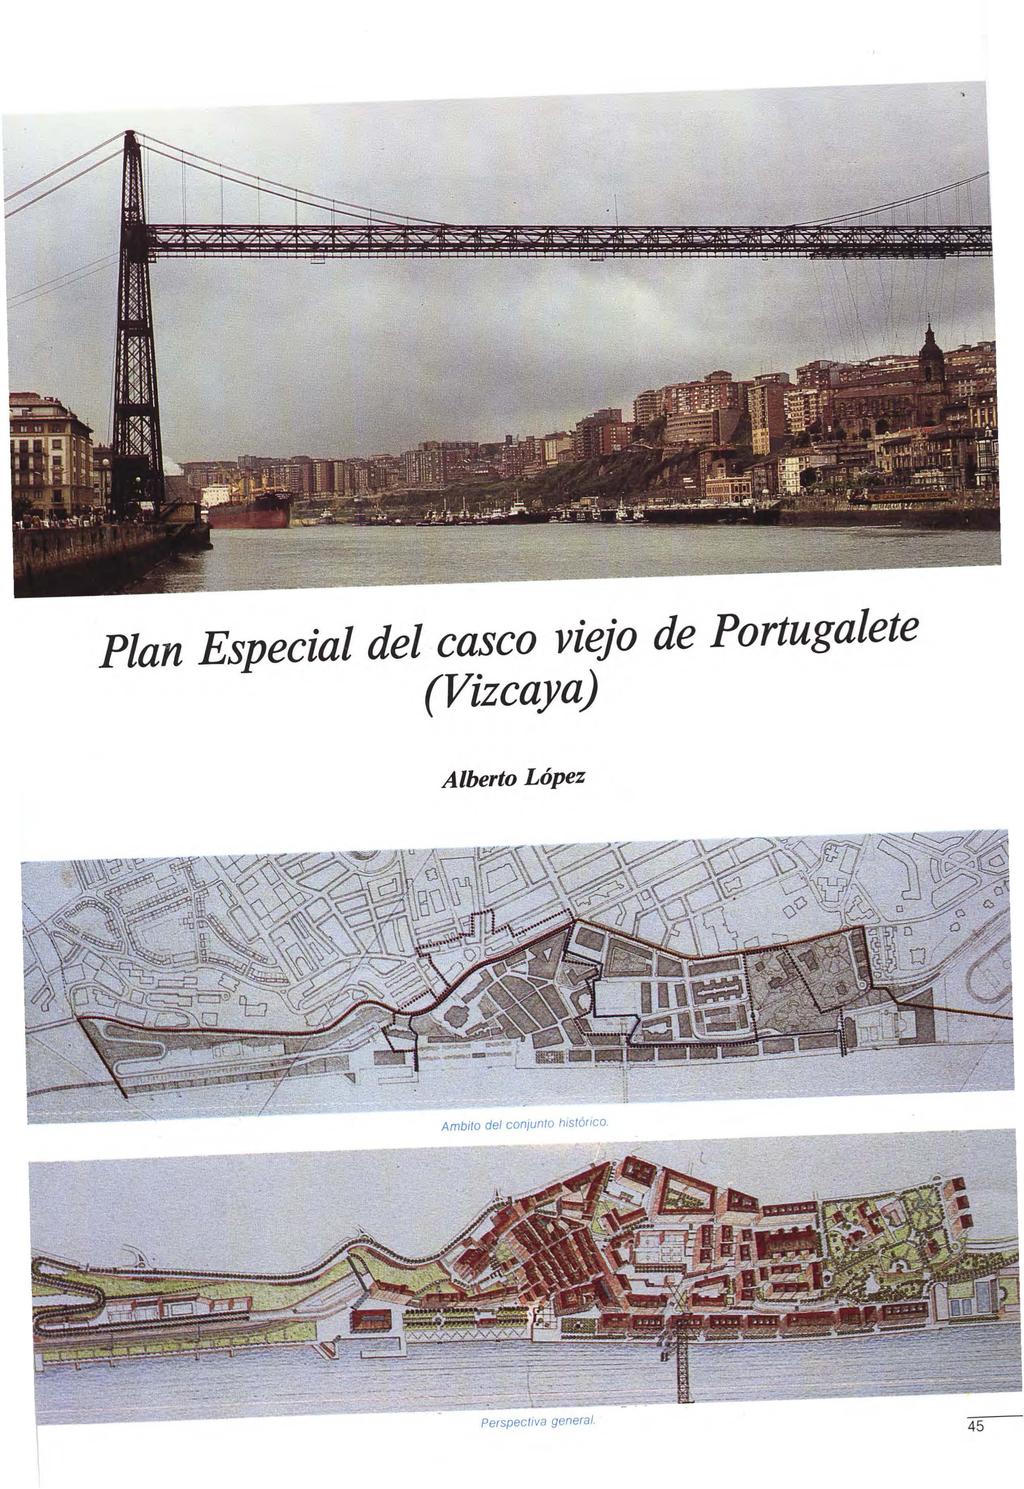 Plan Especial del casco viejo de Portugalete